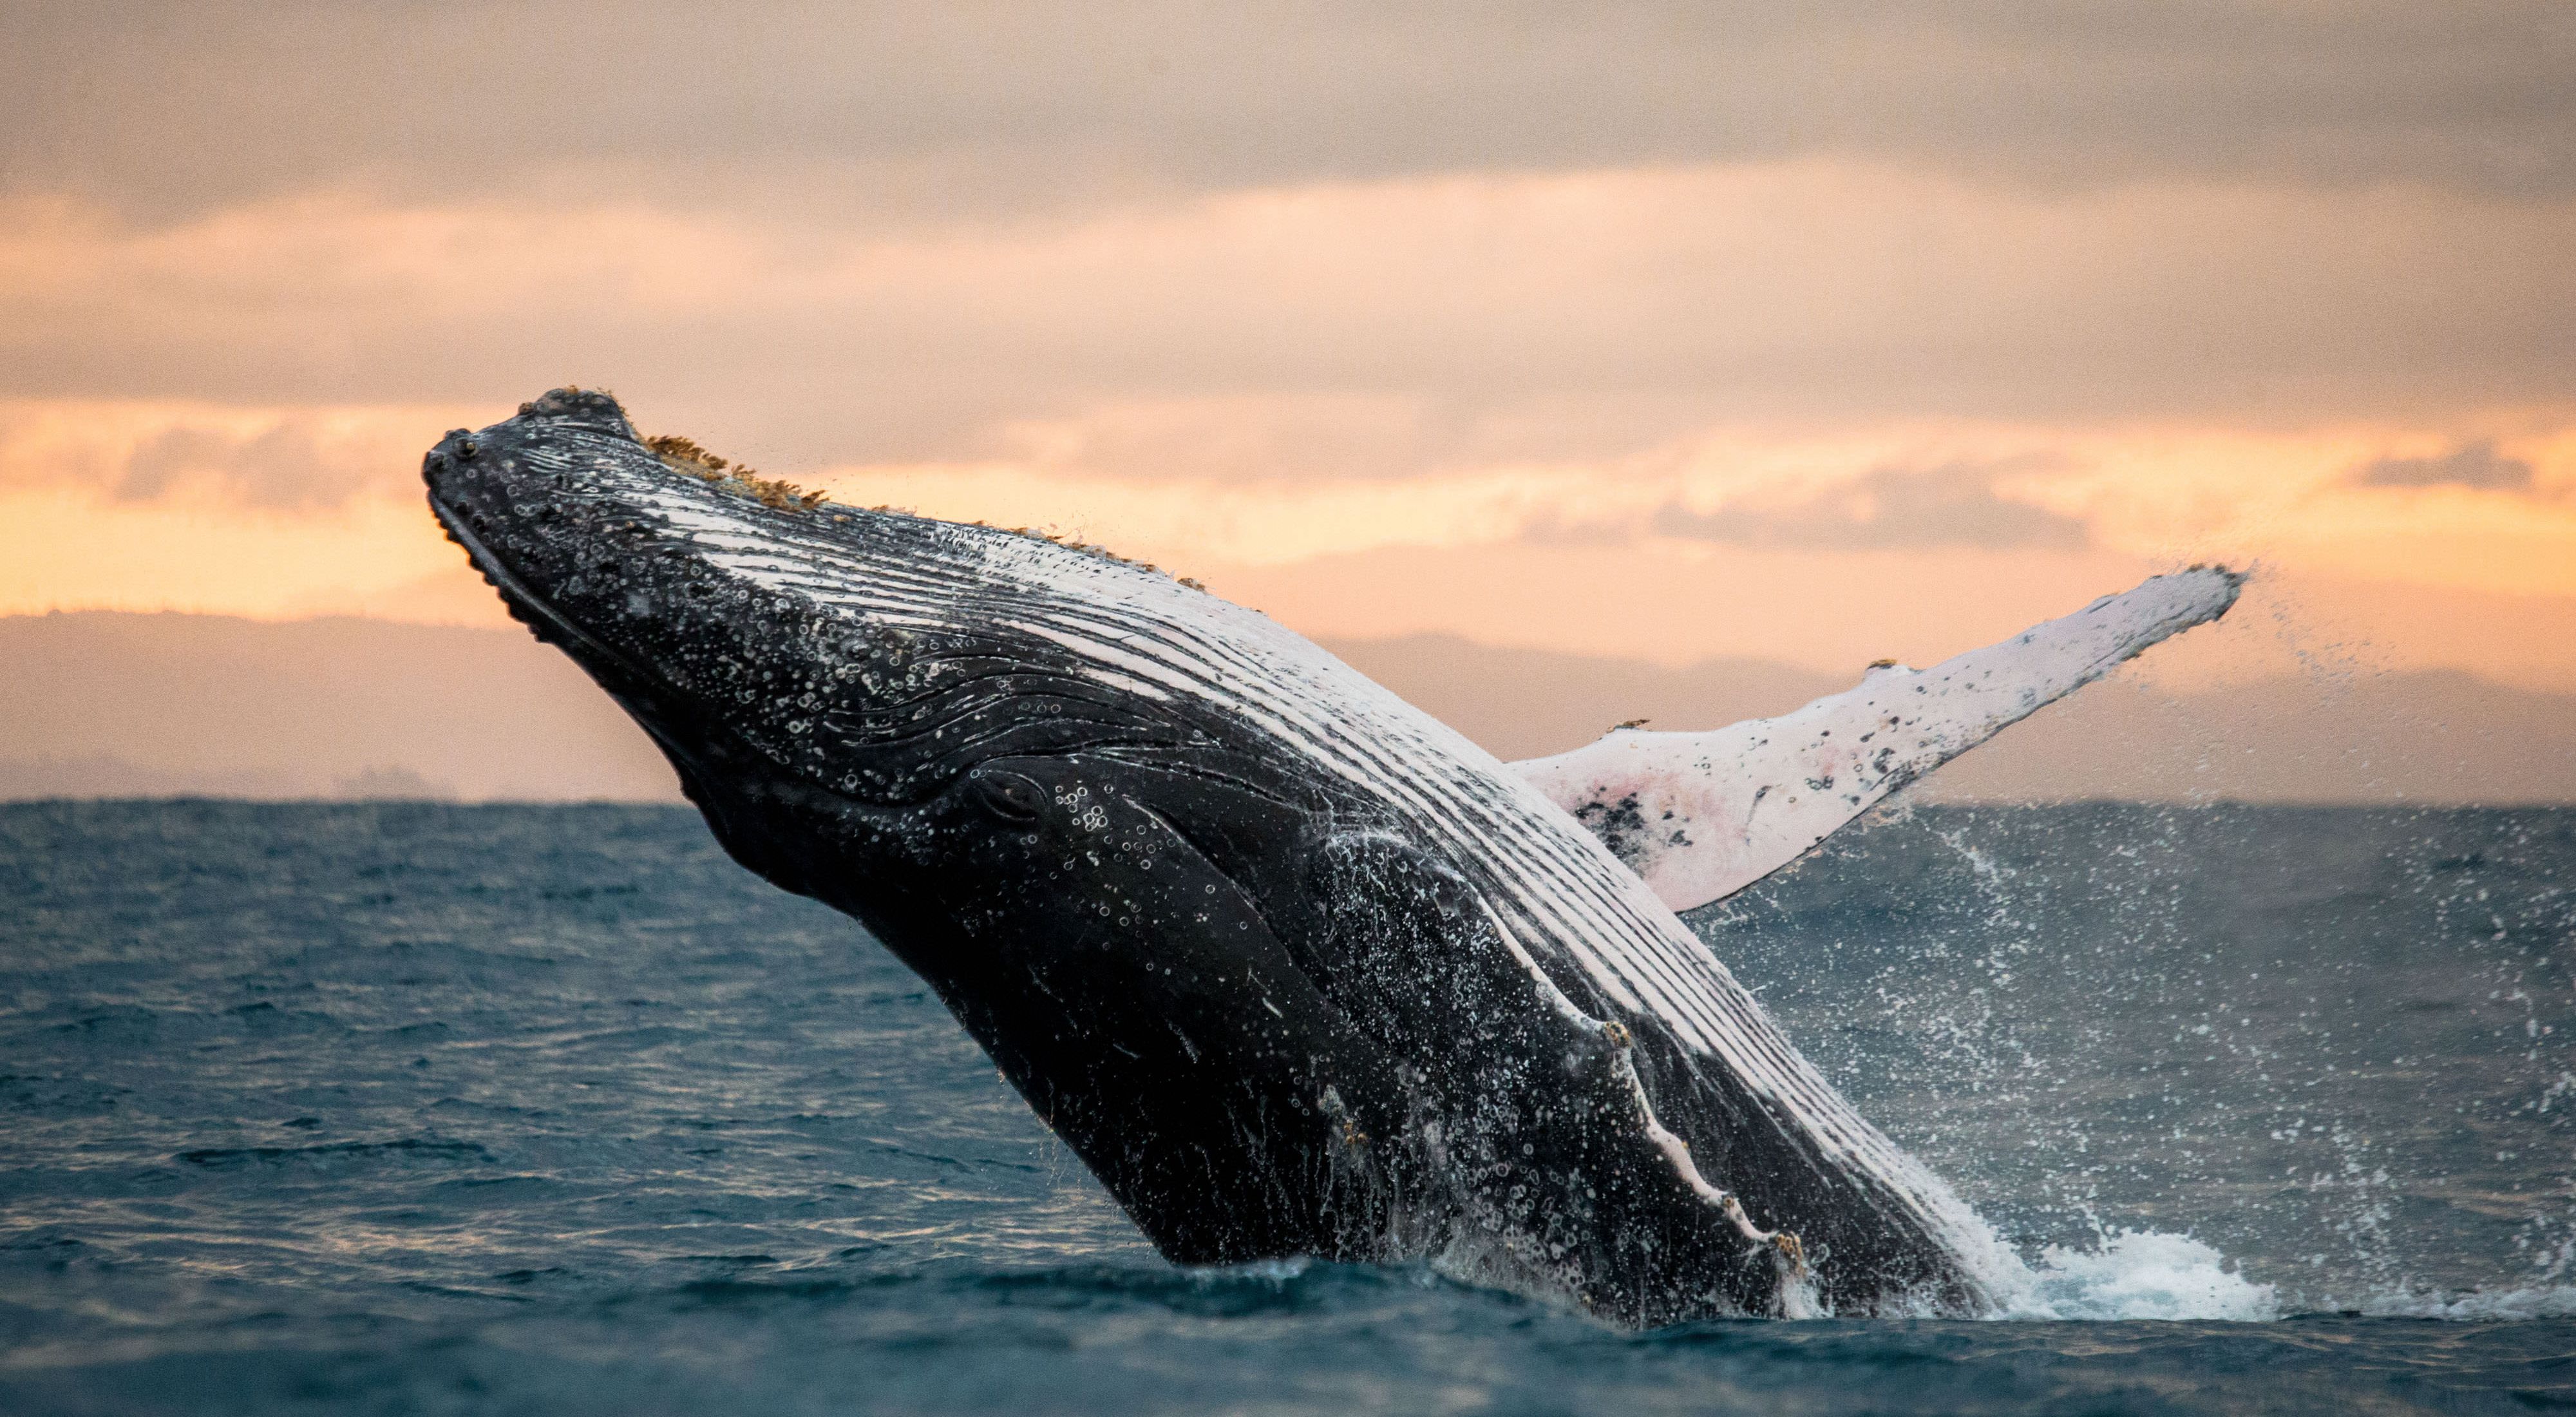 A humpback whale breaching off the California coast.